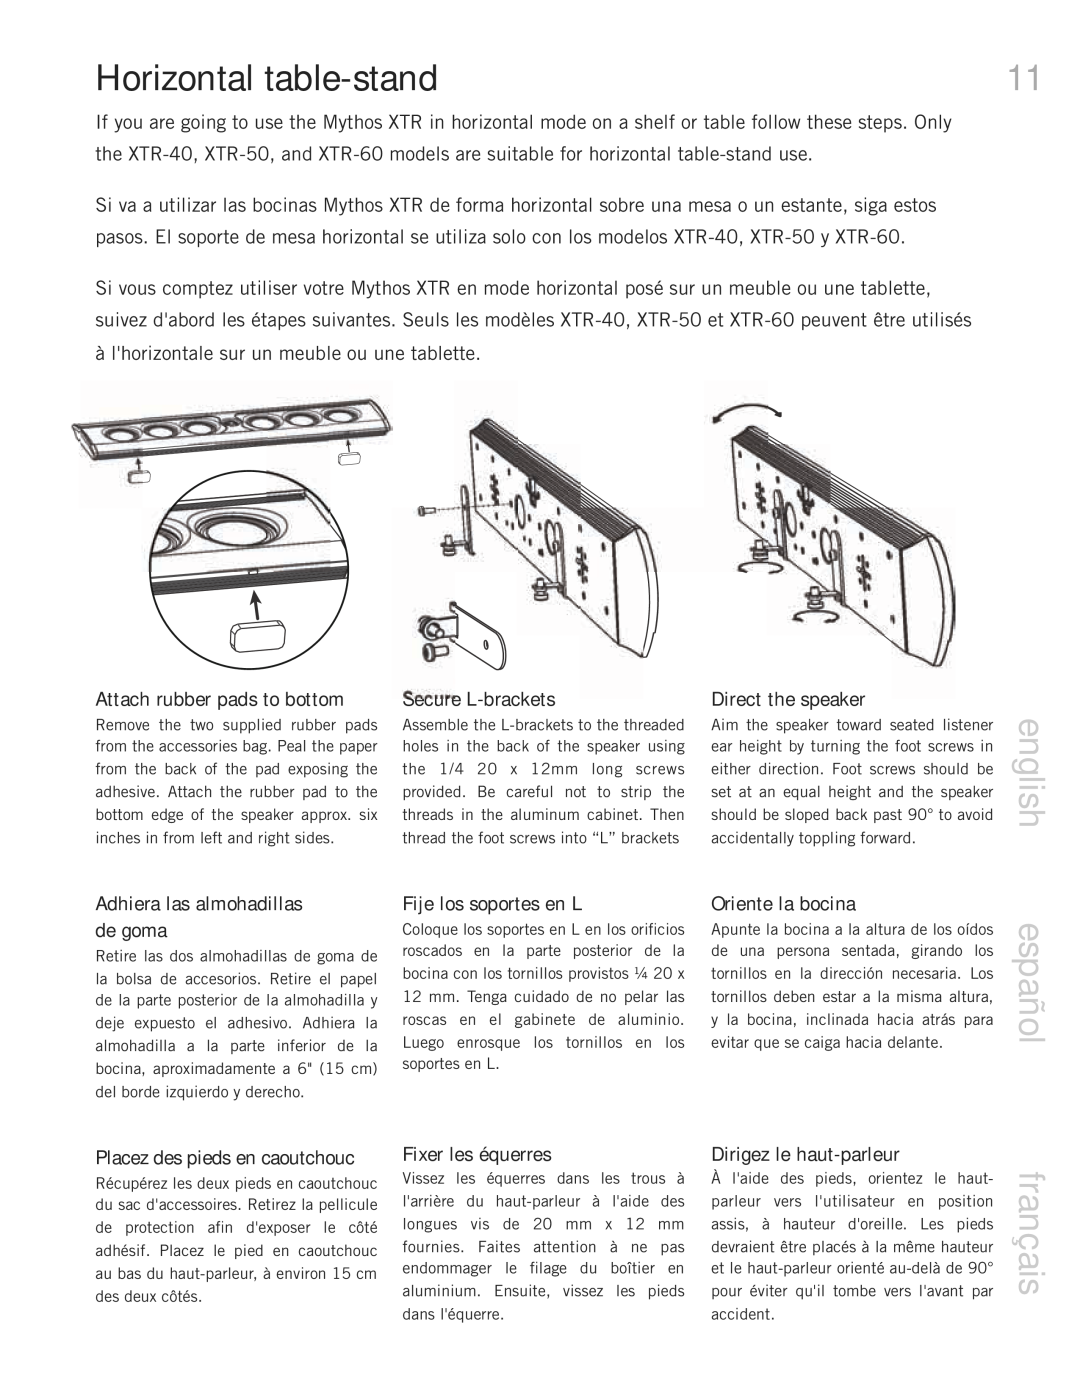 Definitive Technology 20BP, 60, 50, 40, Mythos XTR Loudspeaker System Horizontal table-stand, english, español, français 